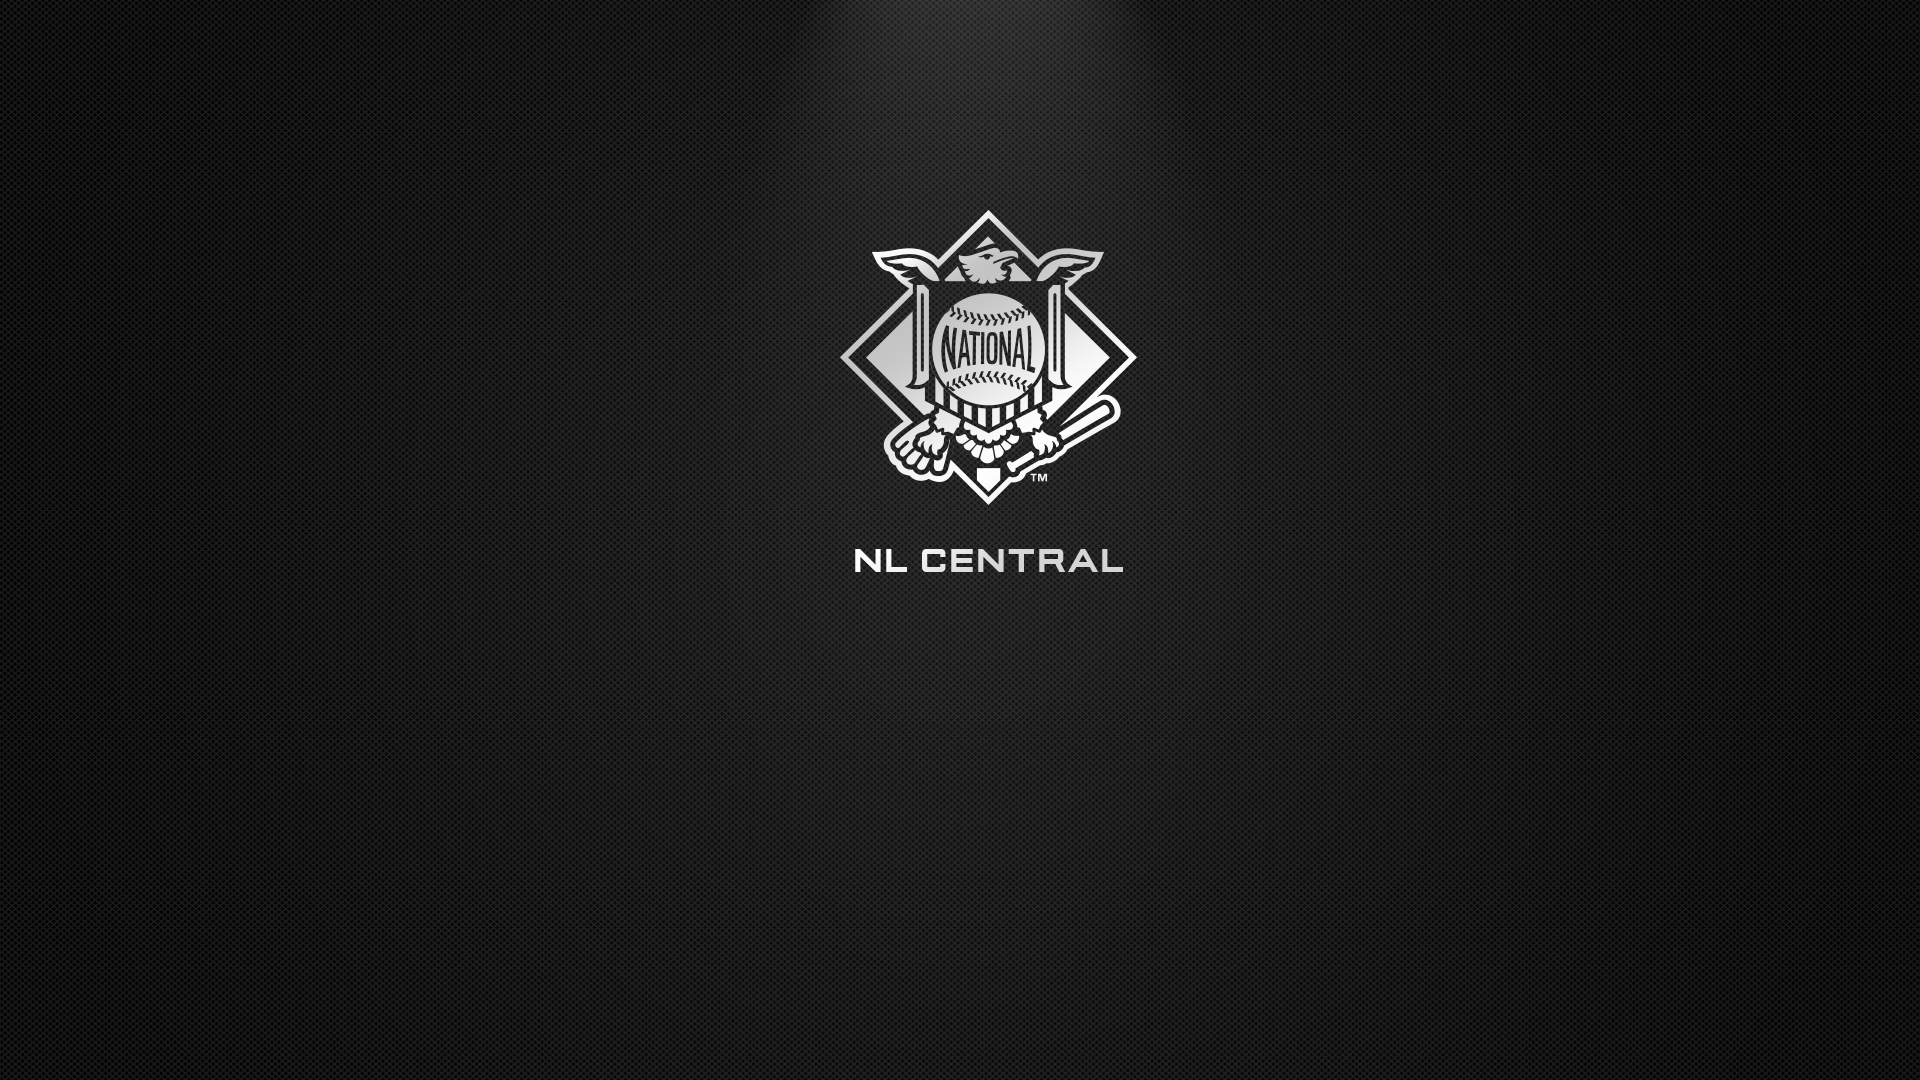 NL Central